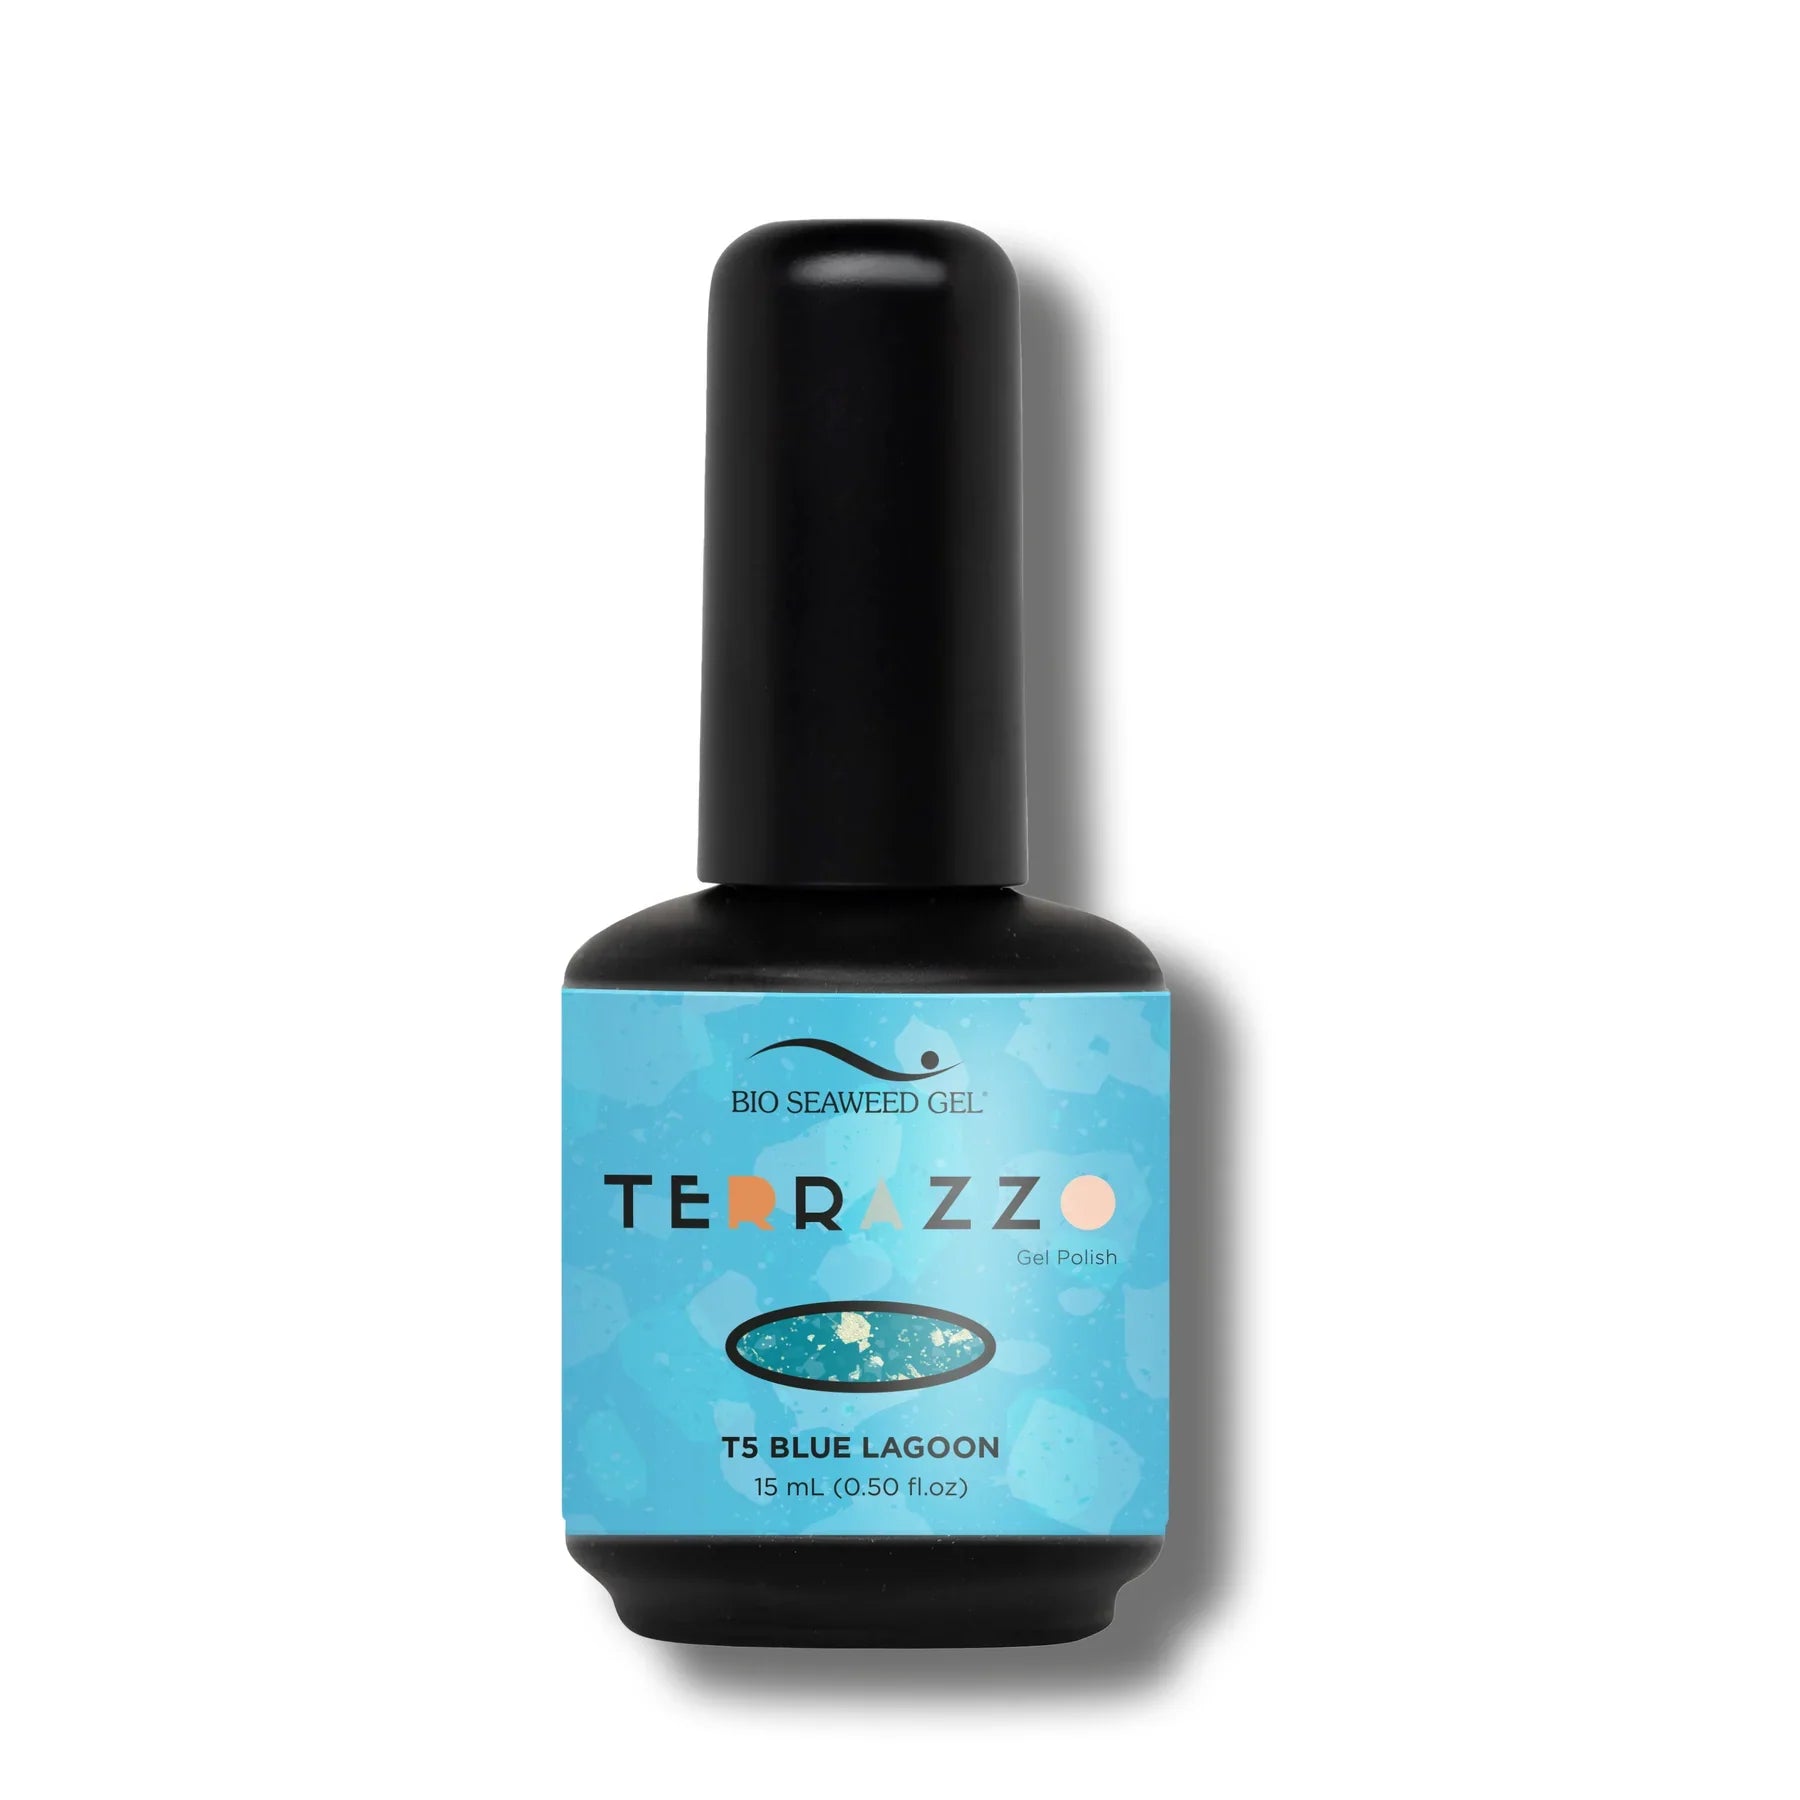 T5 BLUE LAGOON - TERRAZZO BIO SEAWEED - BEMEXCO +Bonito +Fácil